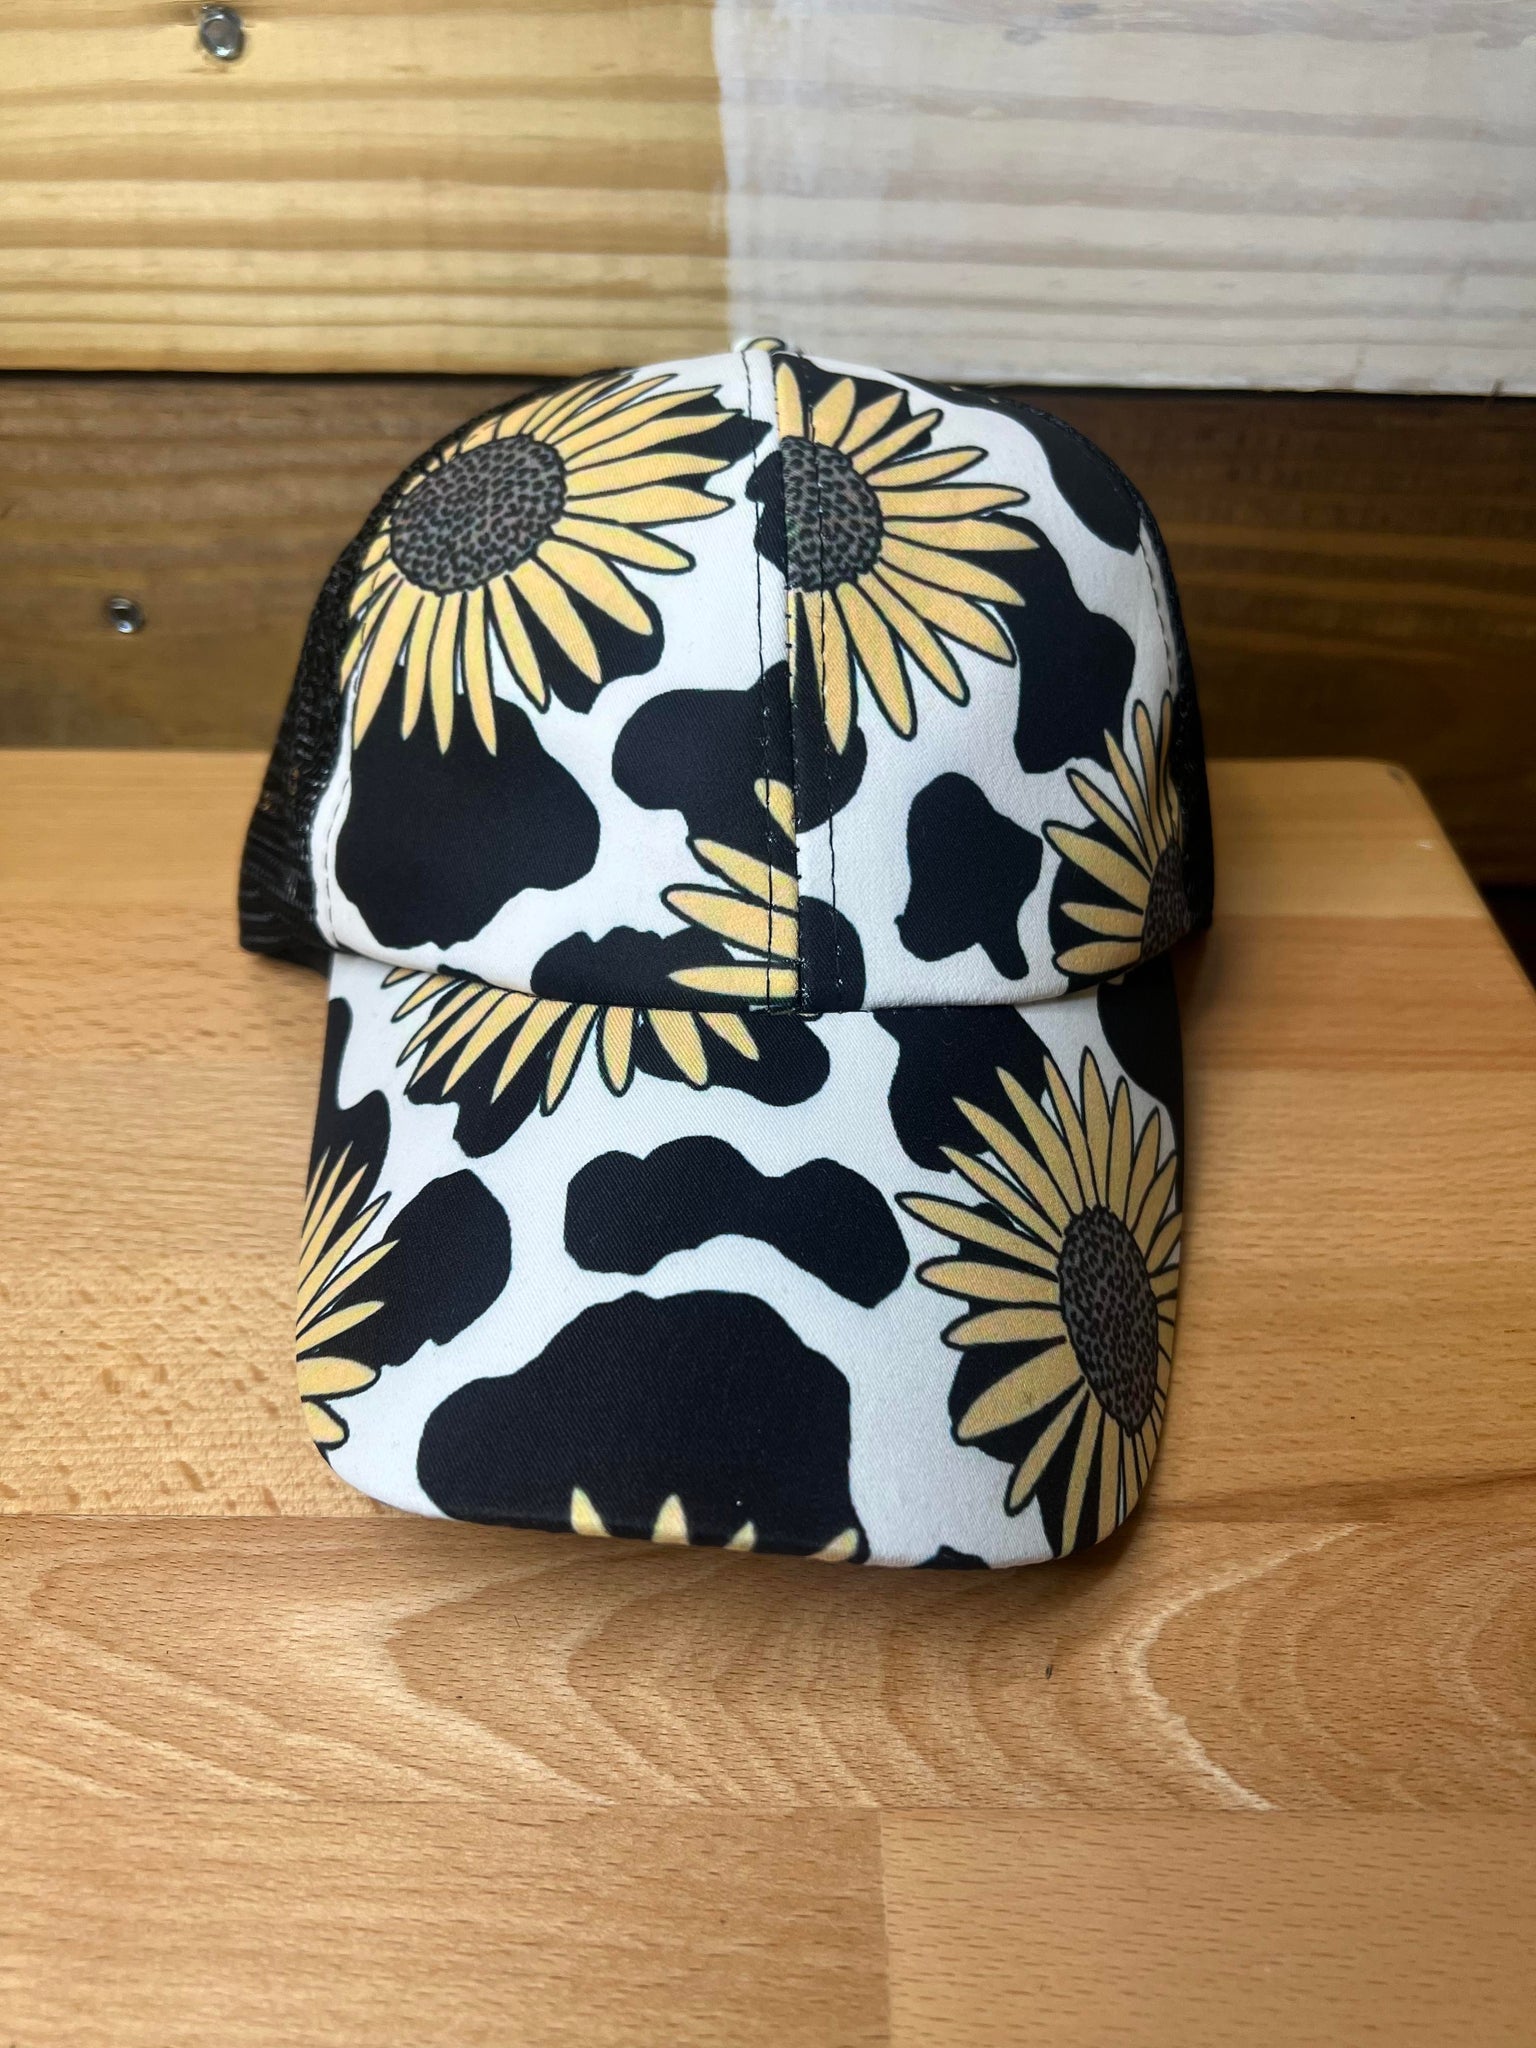 Cow sunflower criss cross ponytail hat